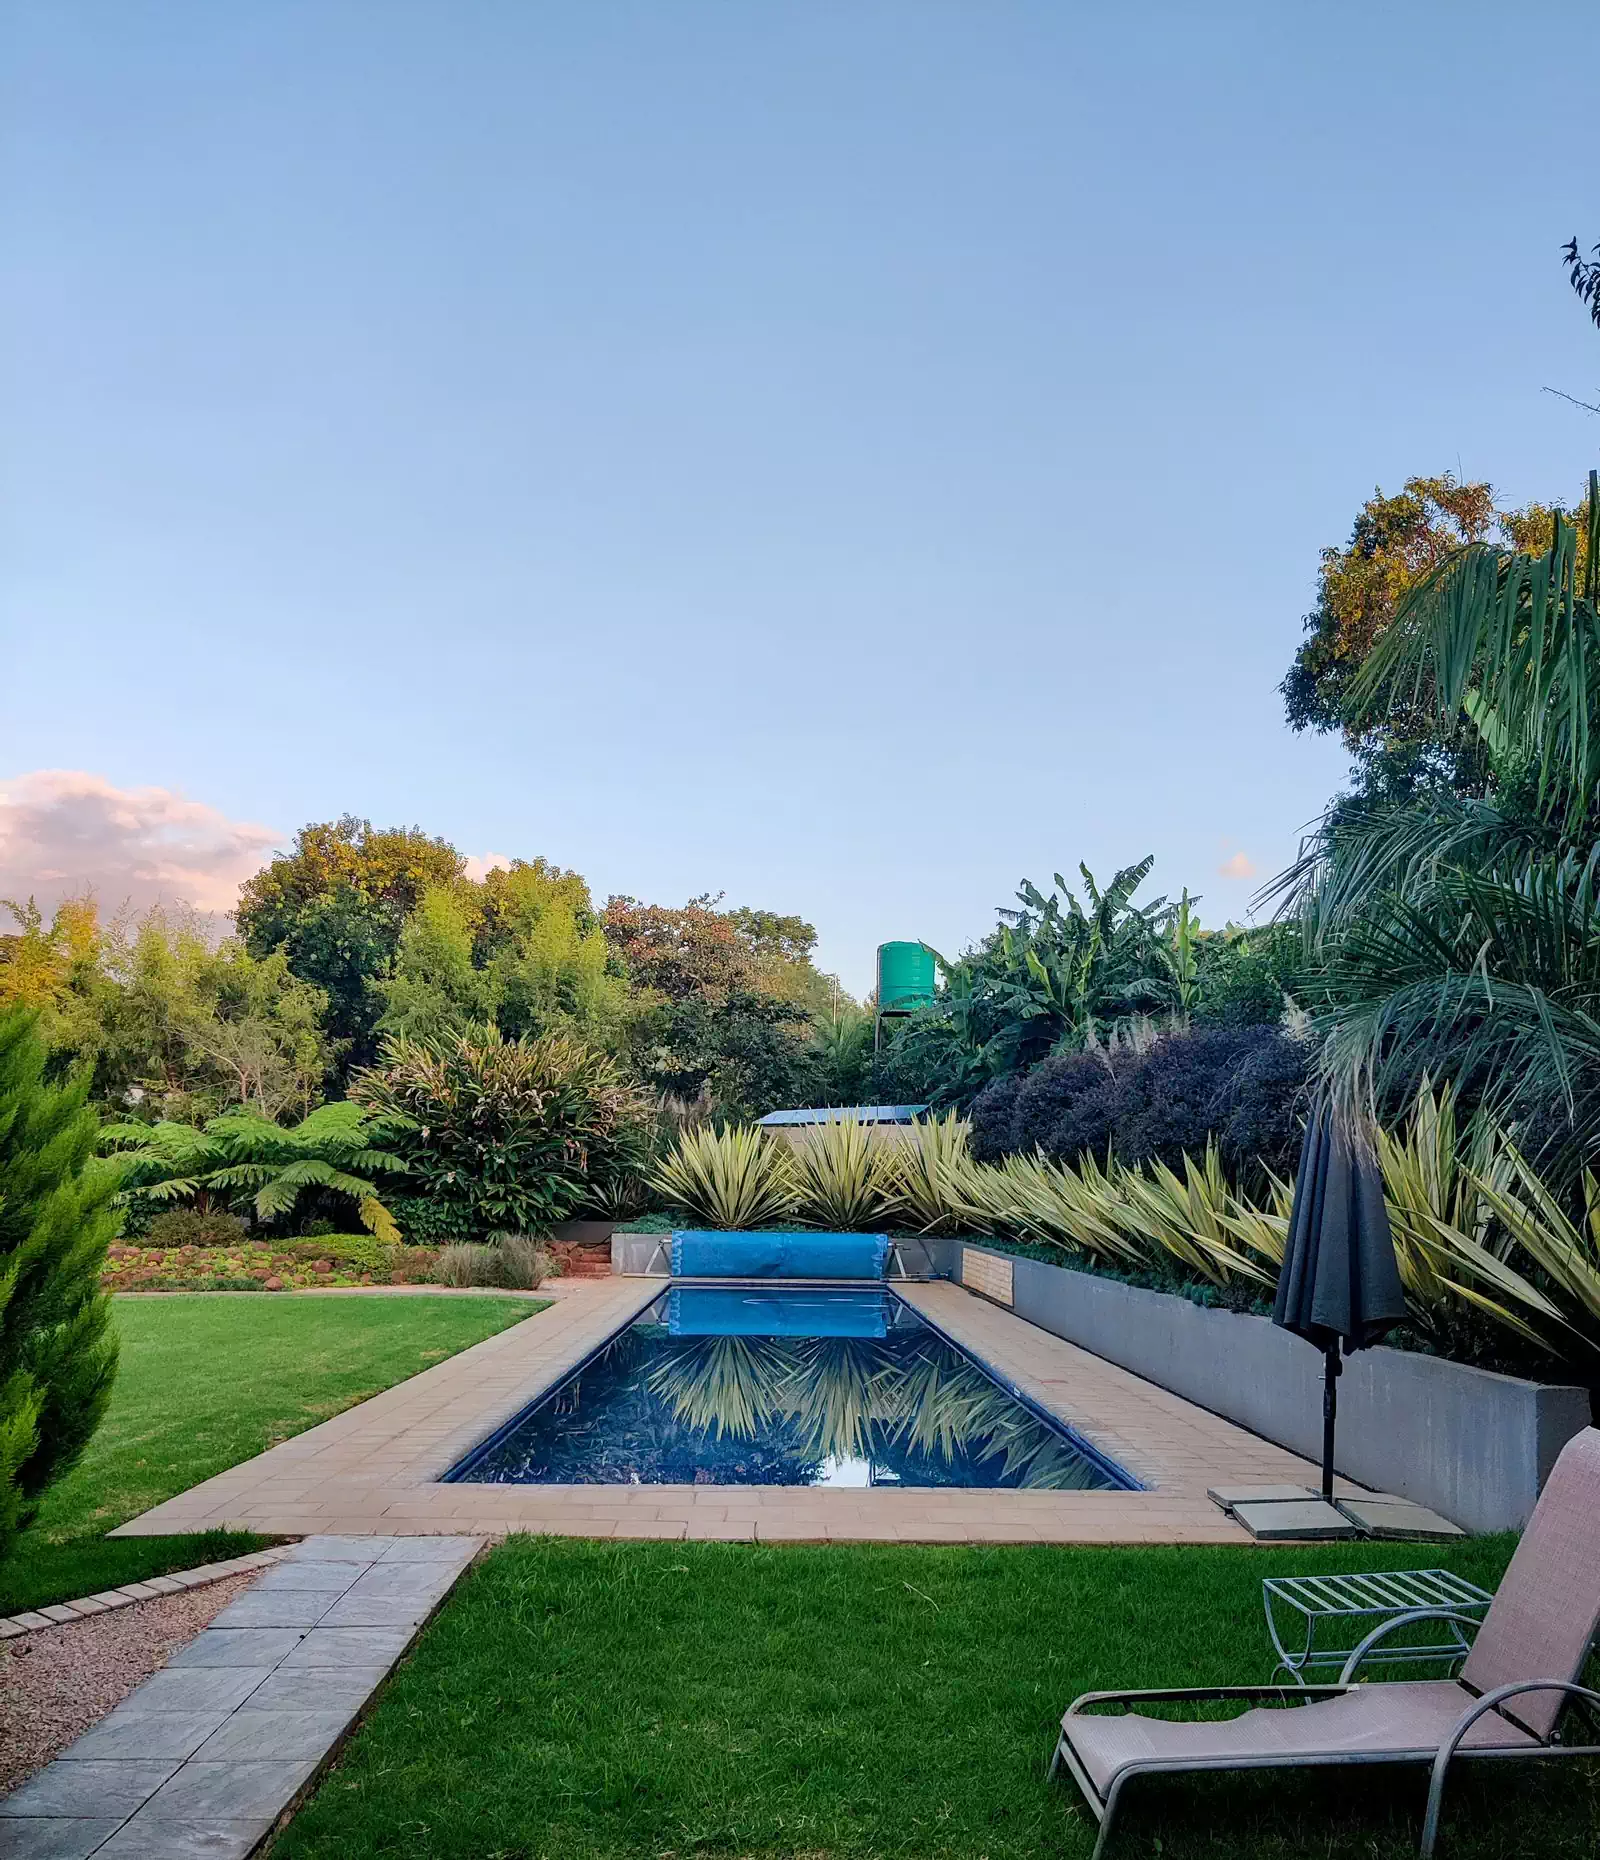 Stunning swimming lap pool among lush greenery